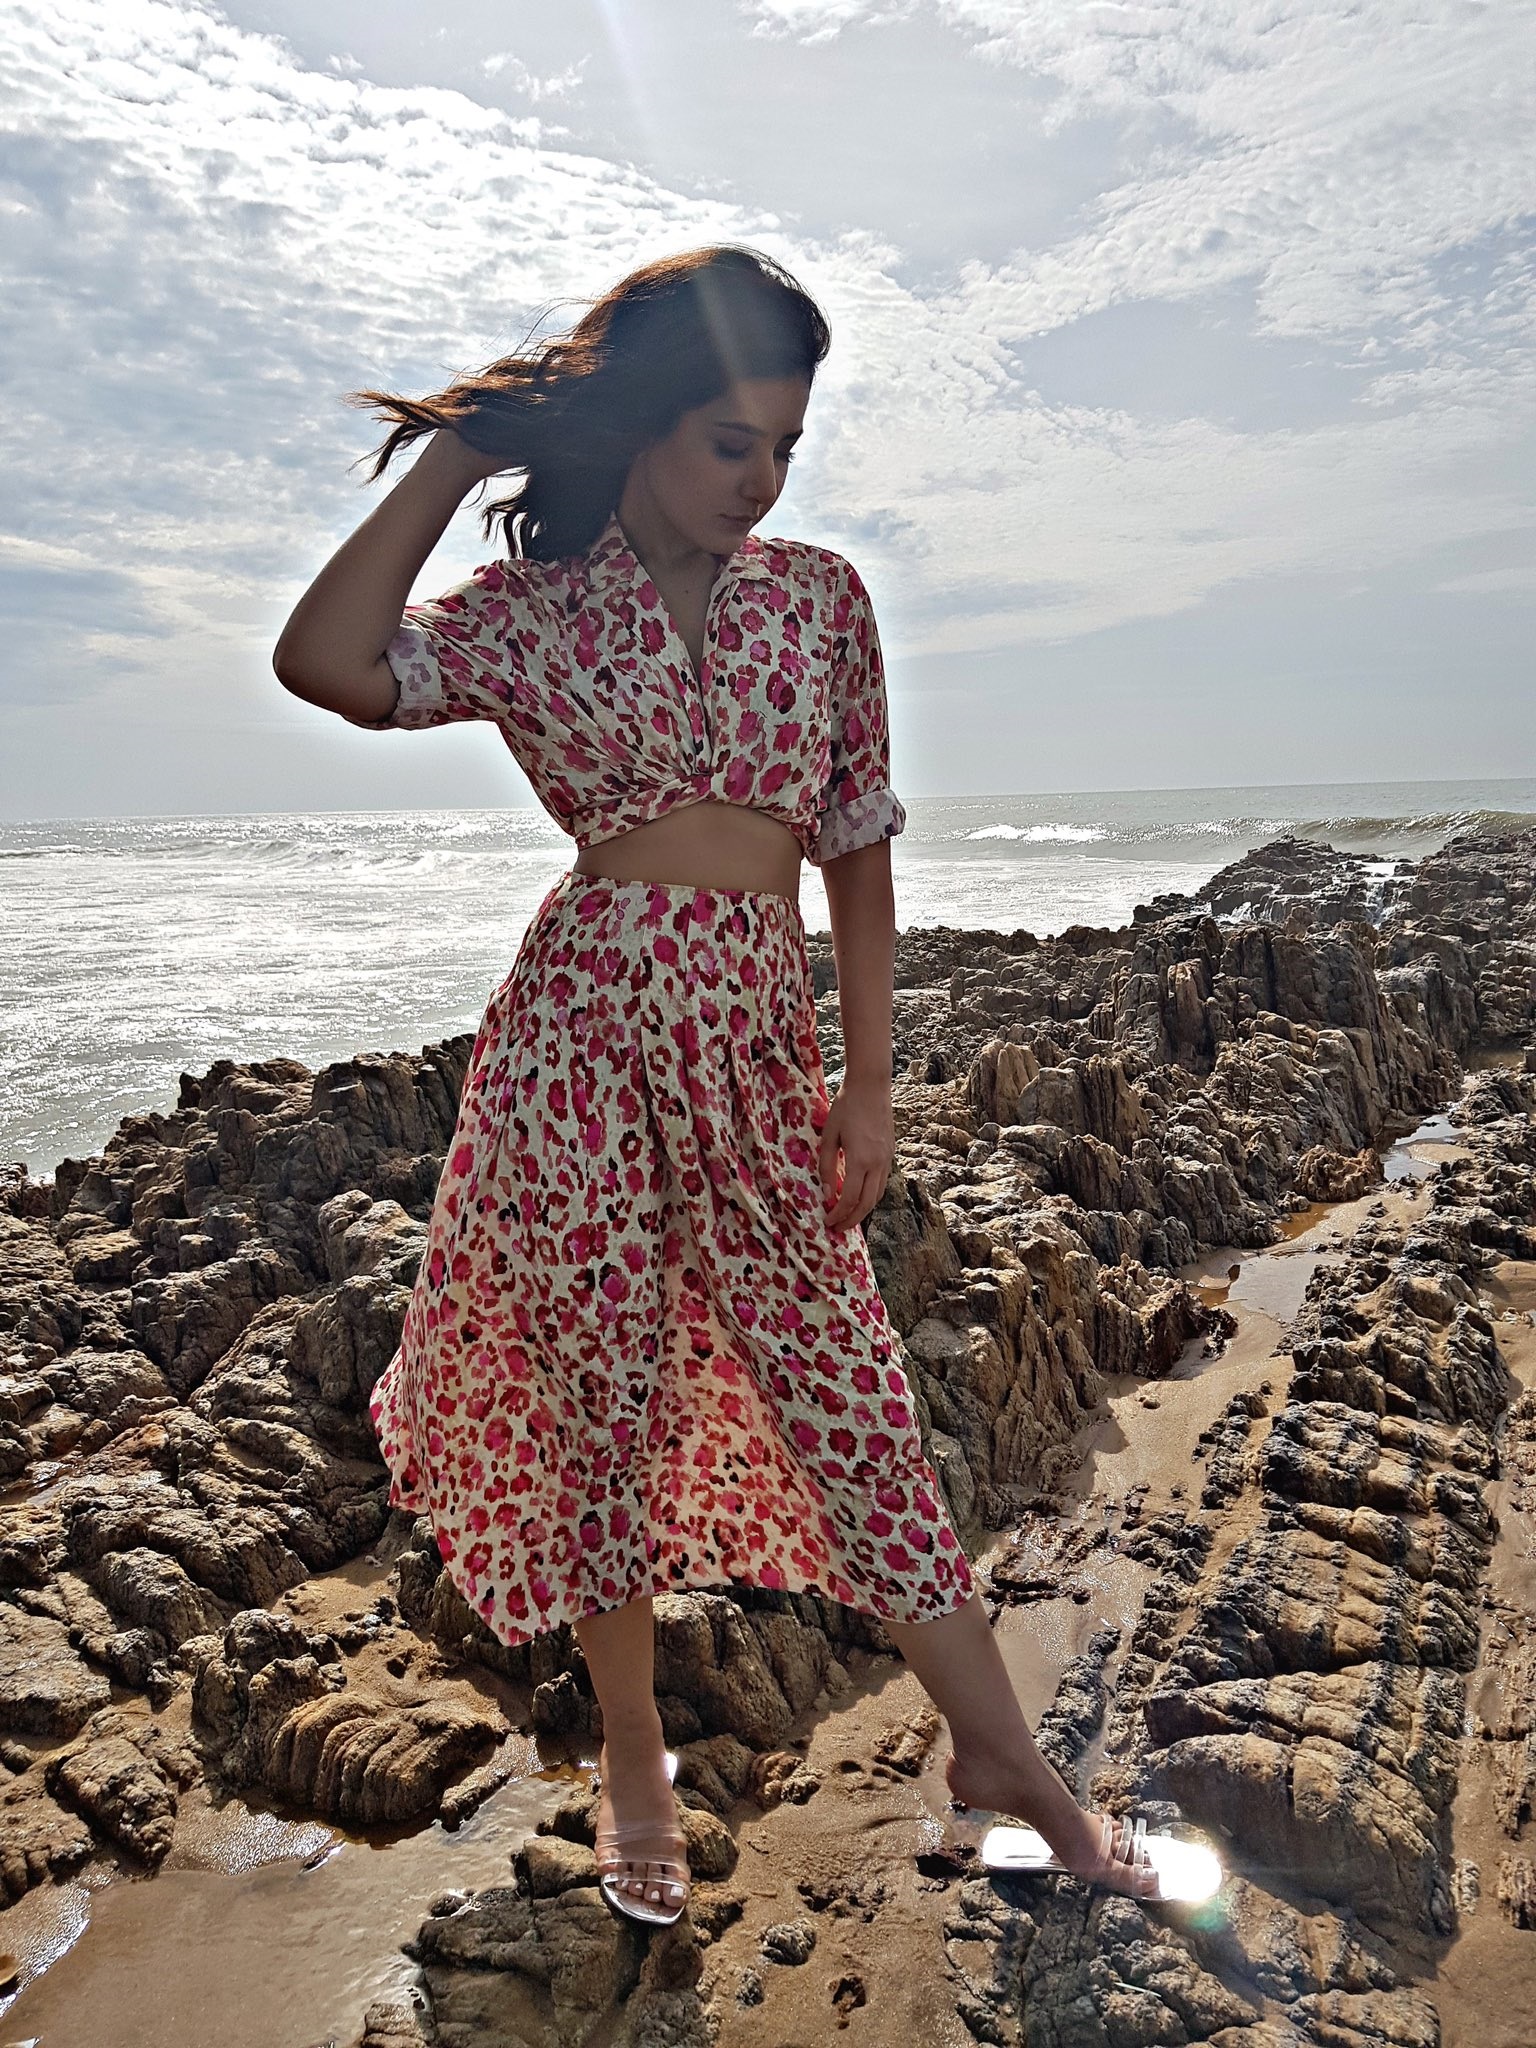 Raashi Khanna Hot In Polka Dots Top And Skirt